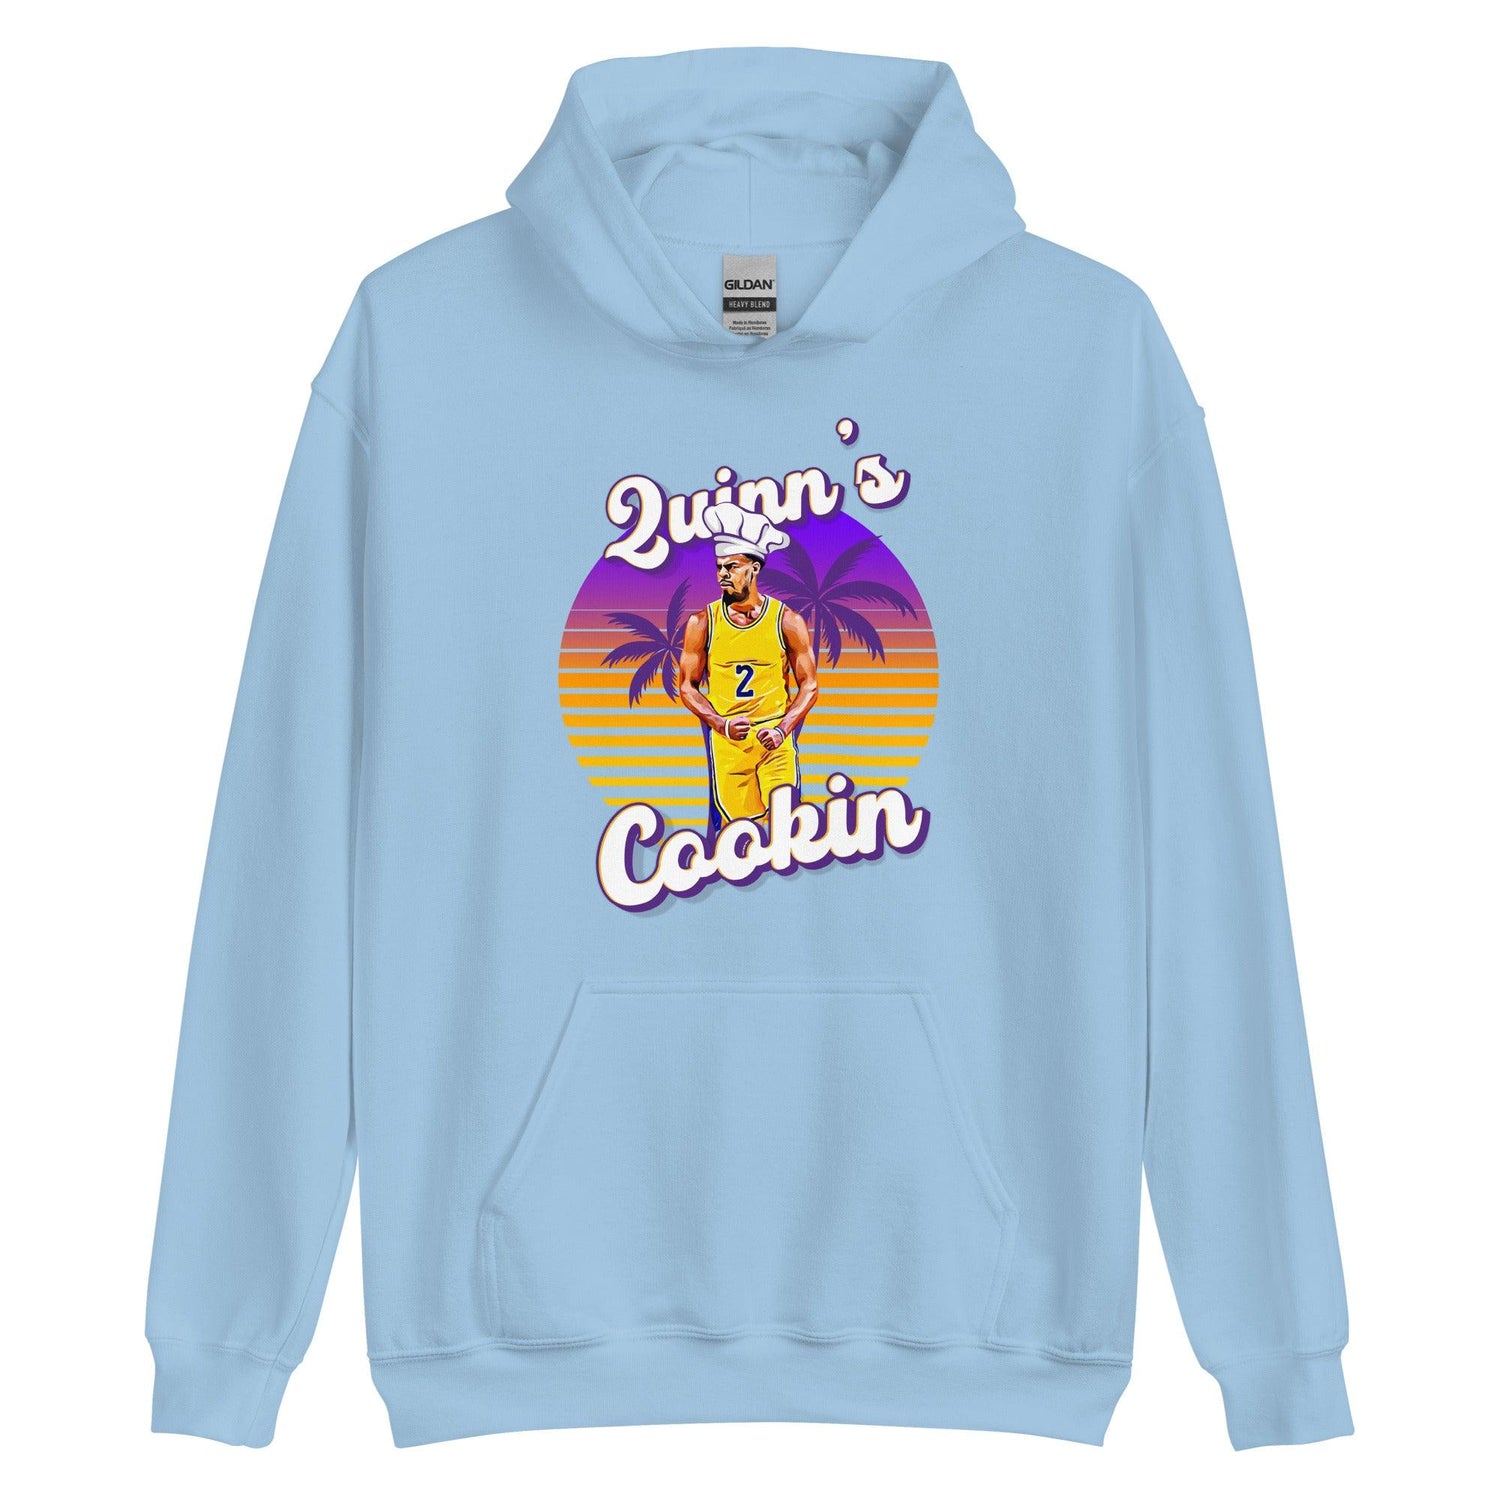 Quinn Cook "Quinns Cookin" Hoodie - Fan Arch